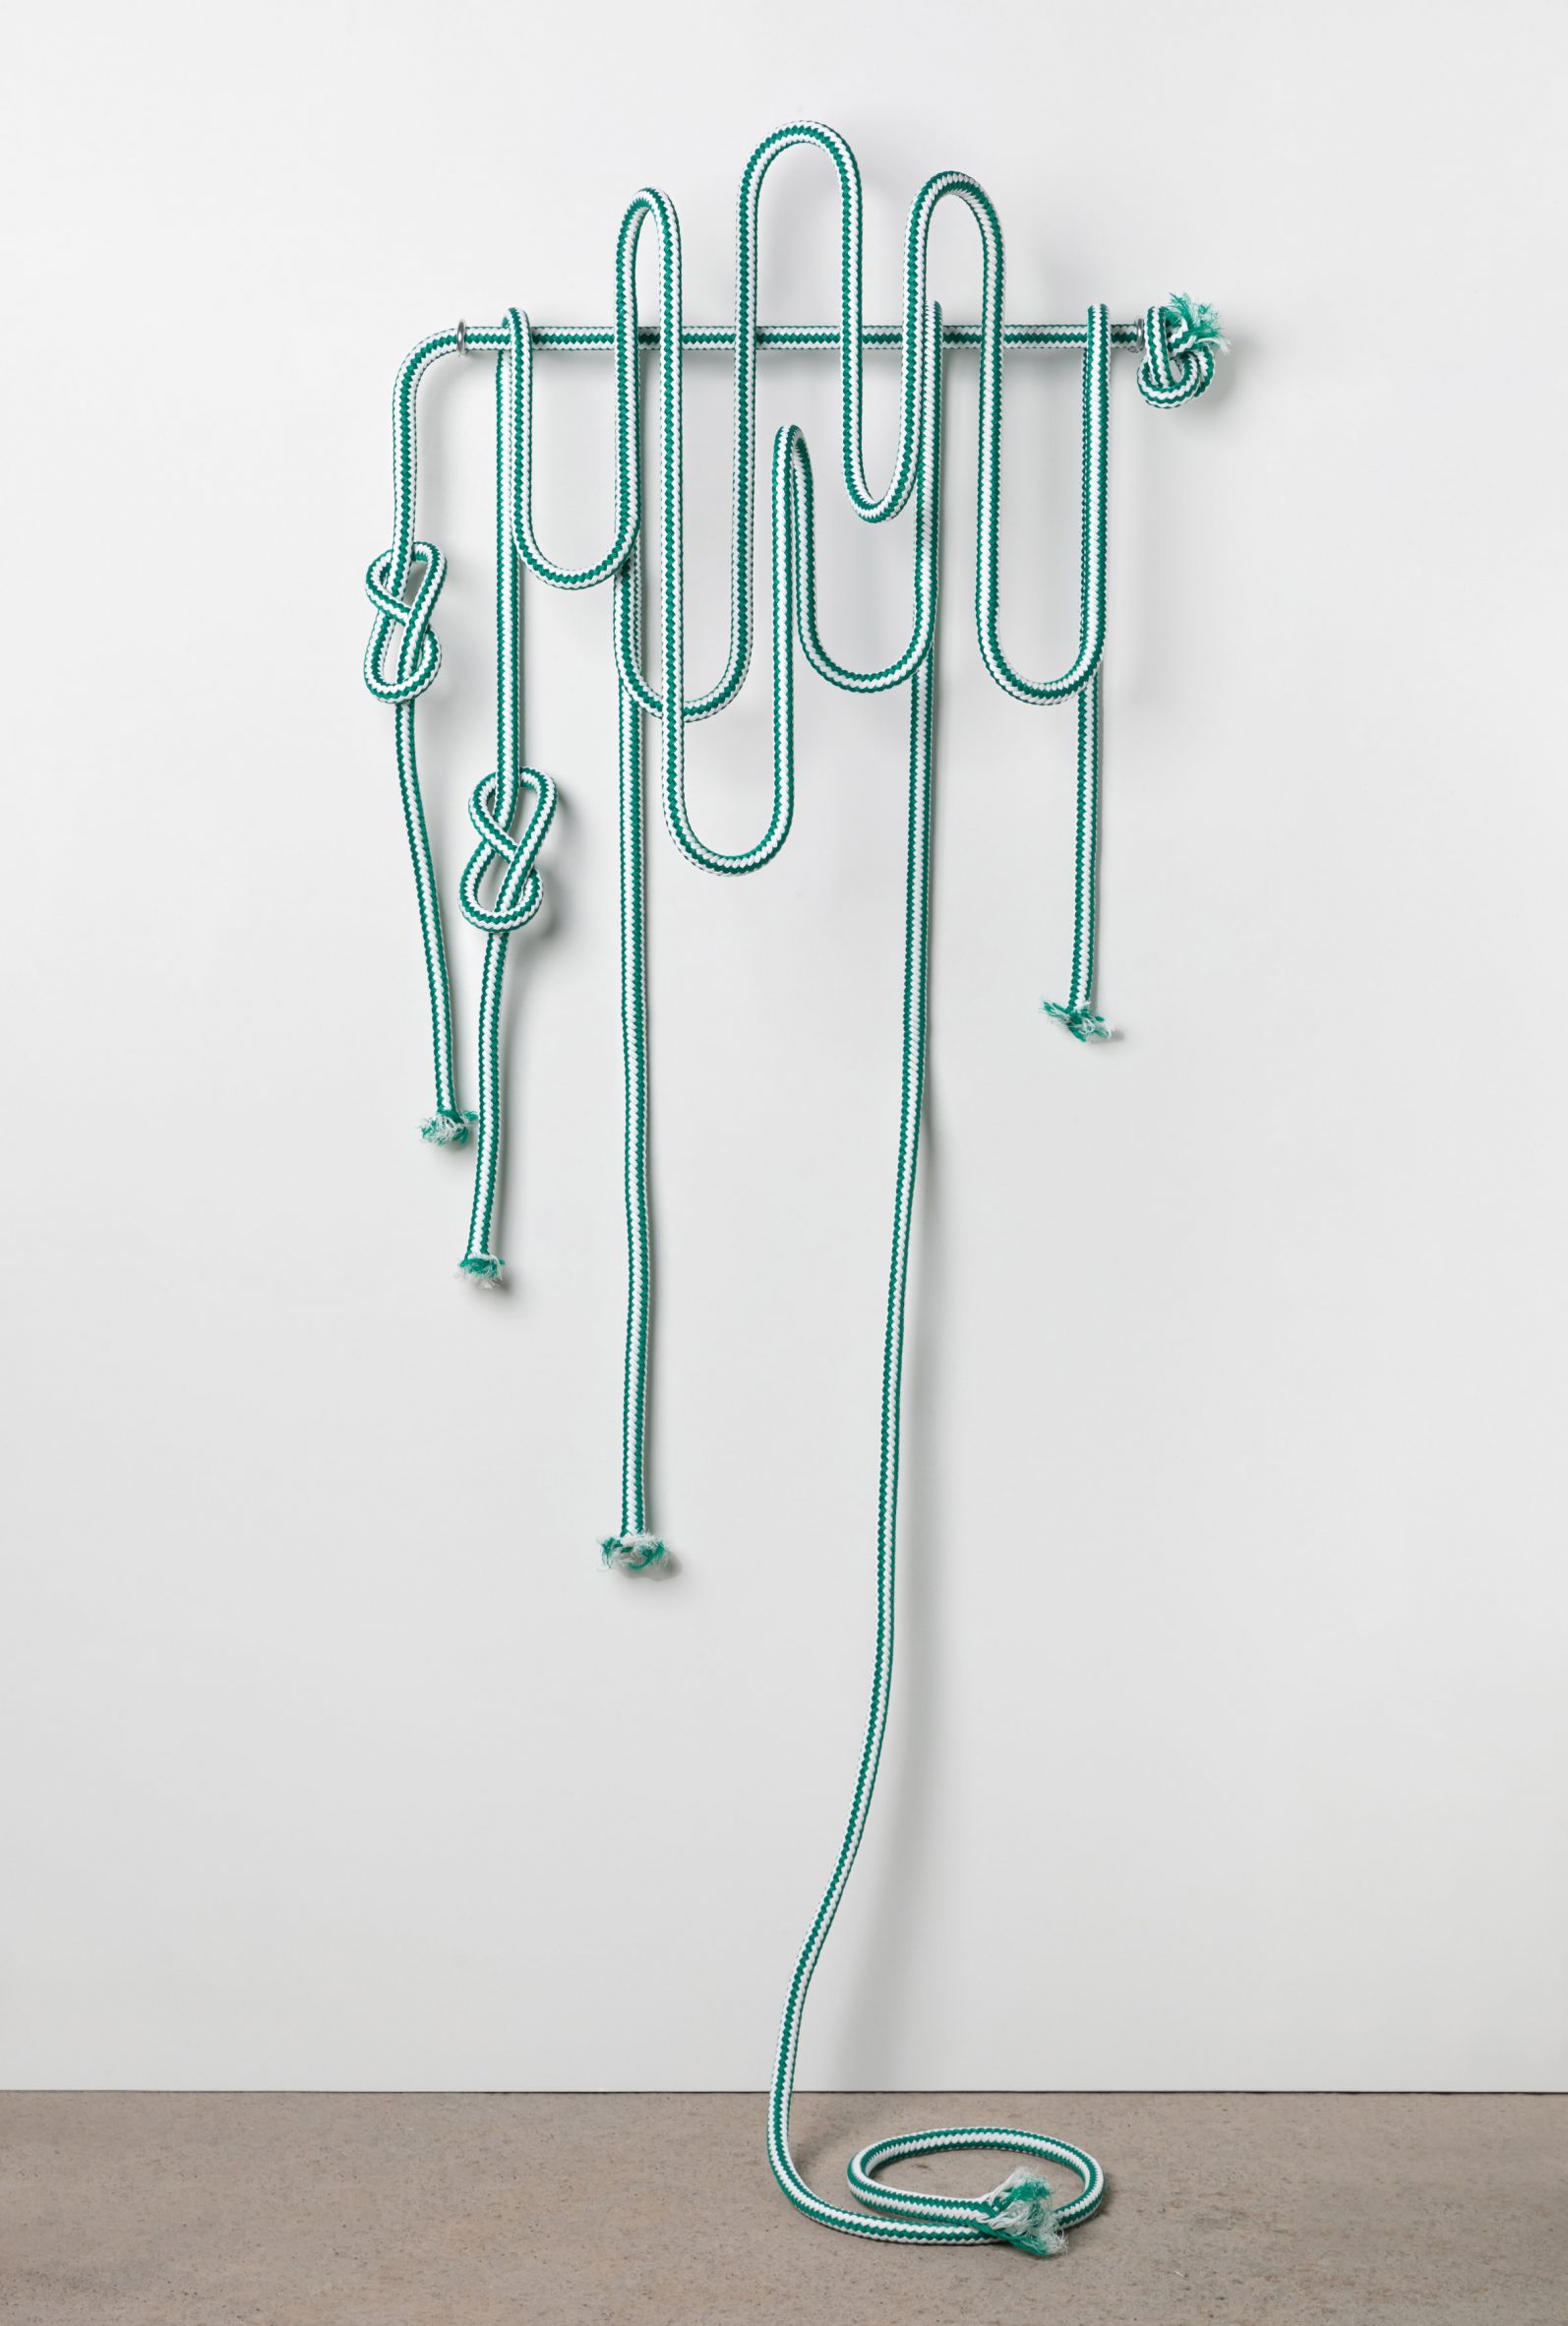 Loopy coat rack by Thórunn Árnadóttir from Hæ/Hi exhibition at DesignMarch